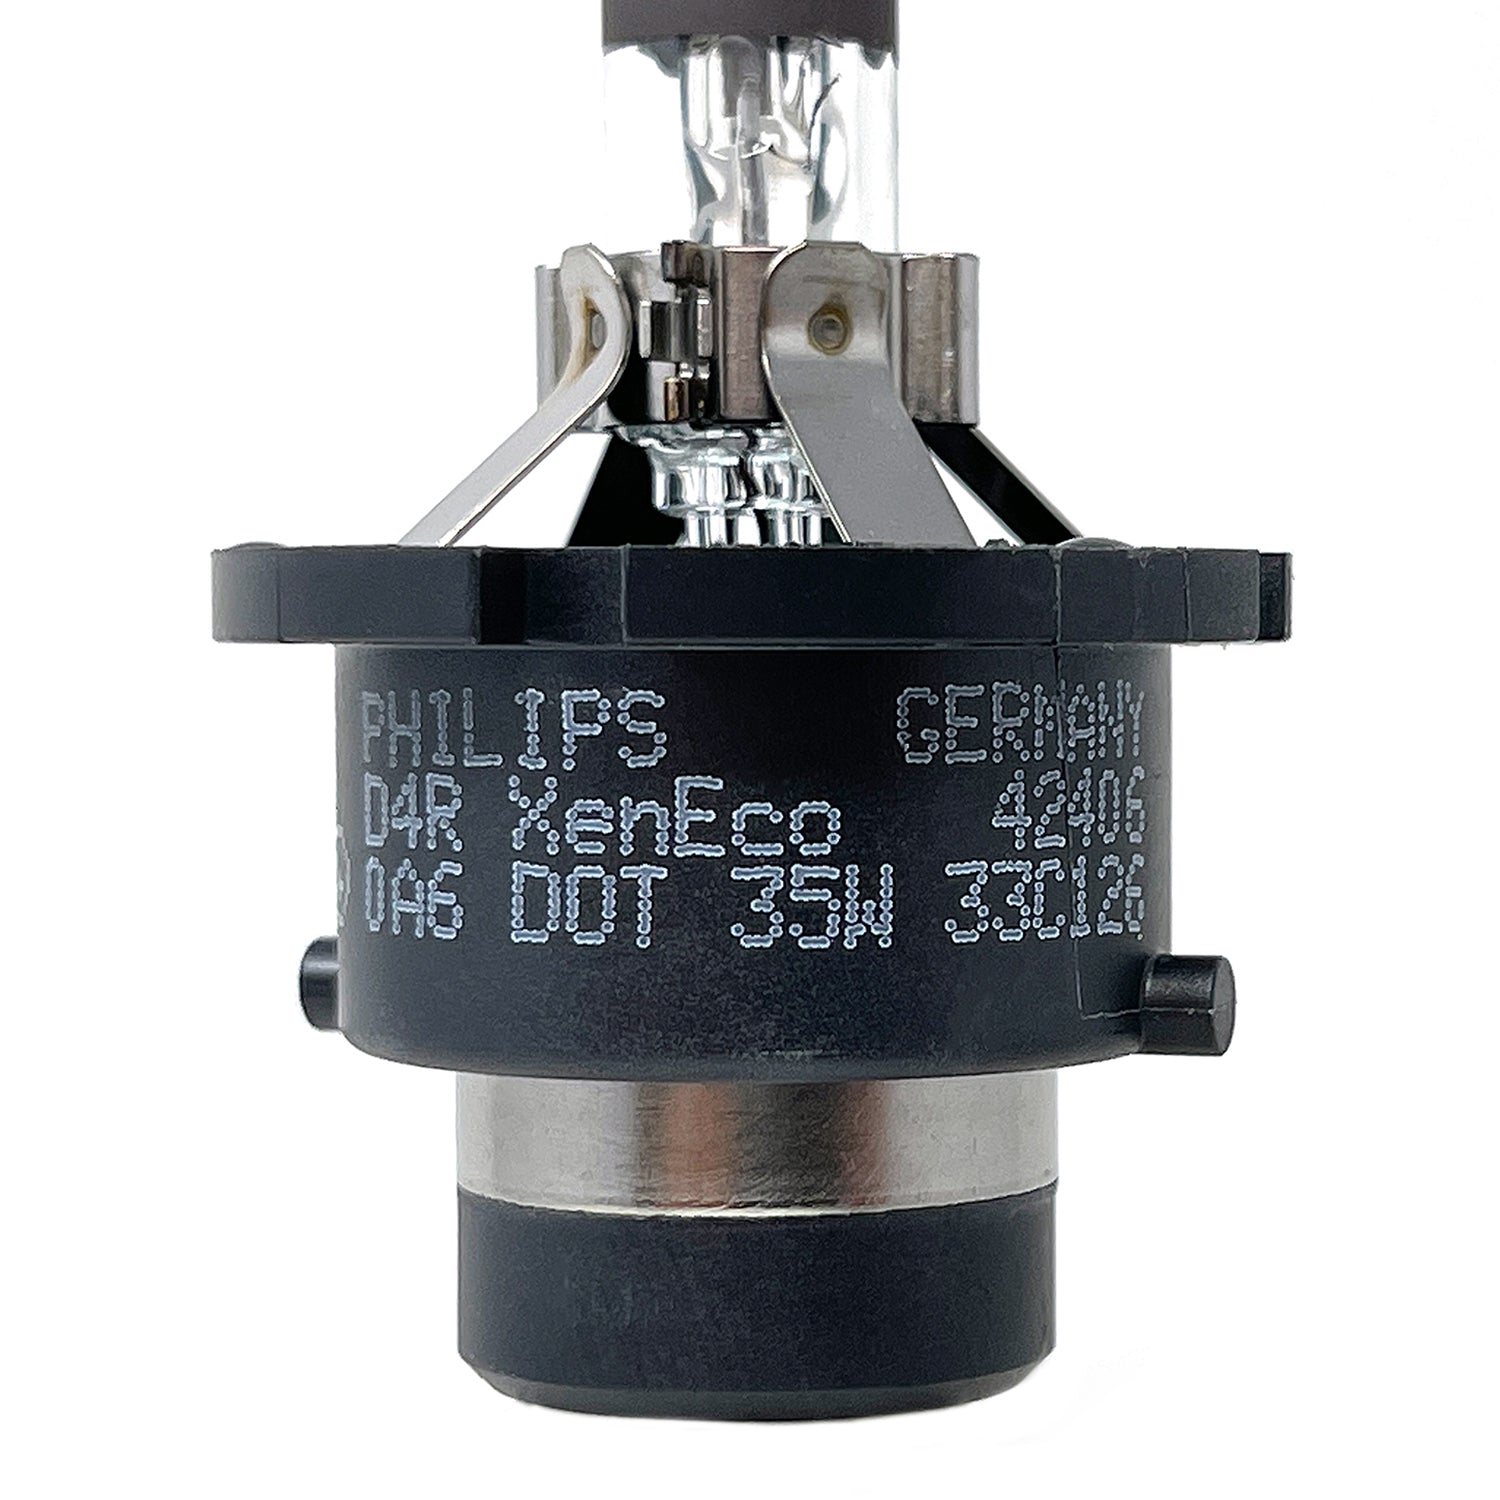 Philips D4R XenEco Xenon HID Bulb (sold as a single bulb) Part